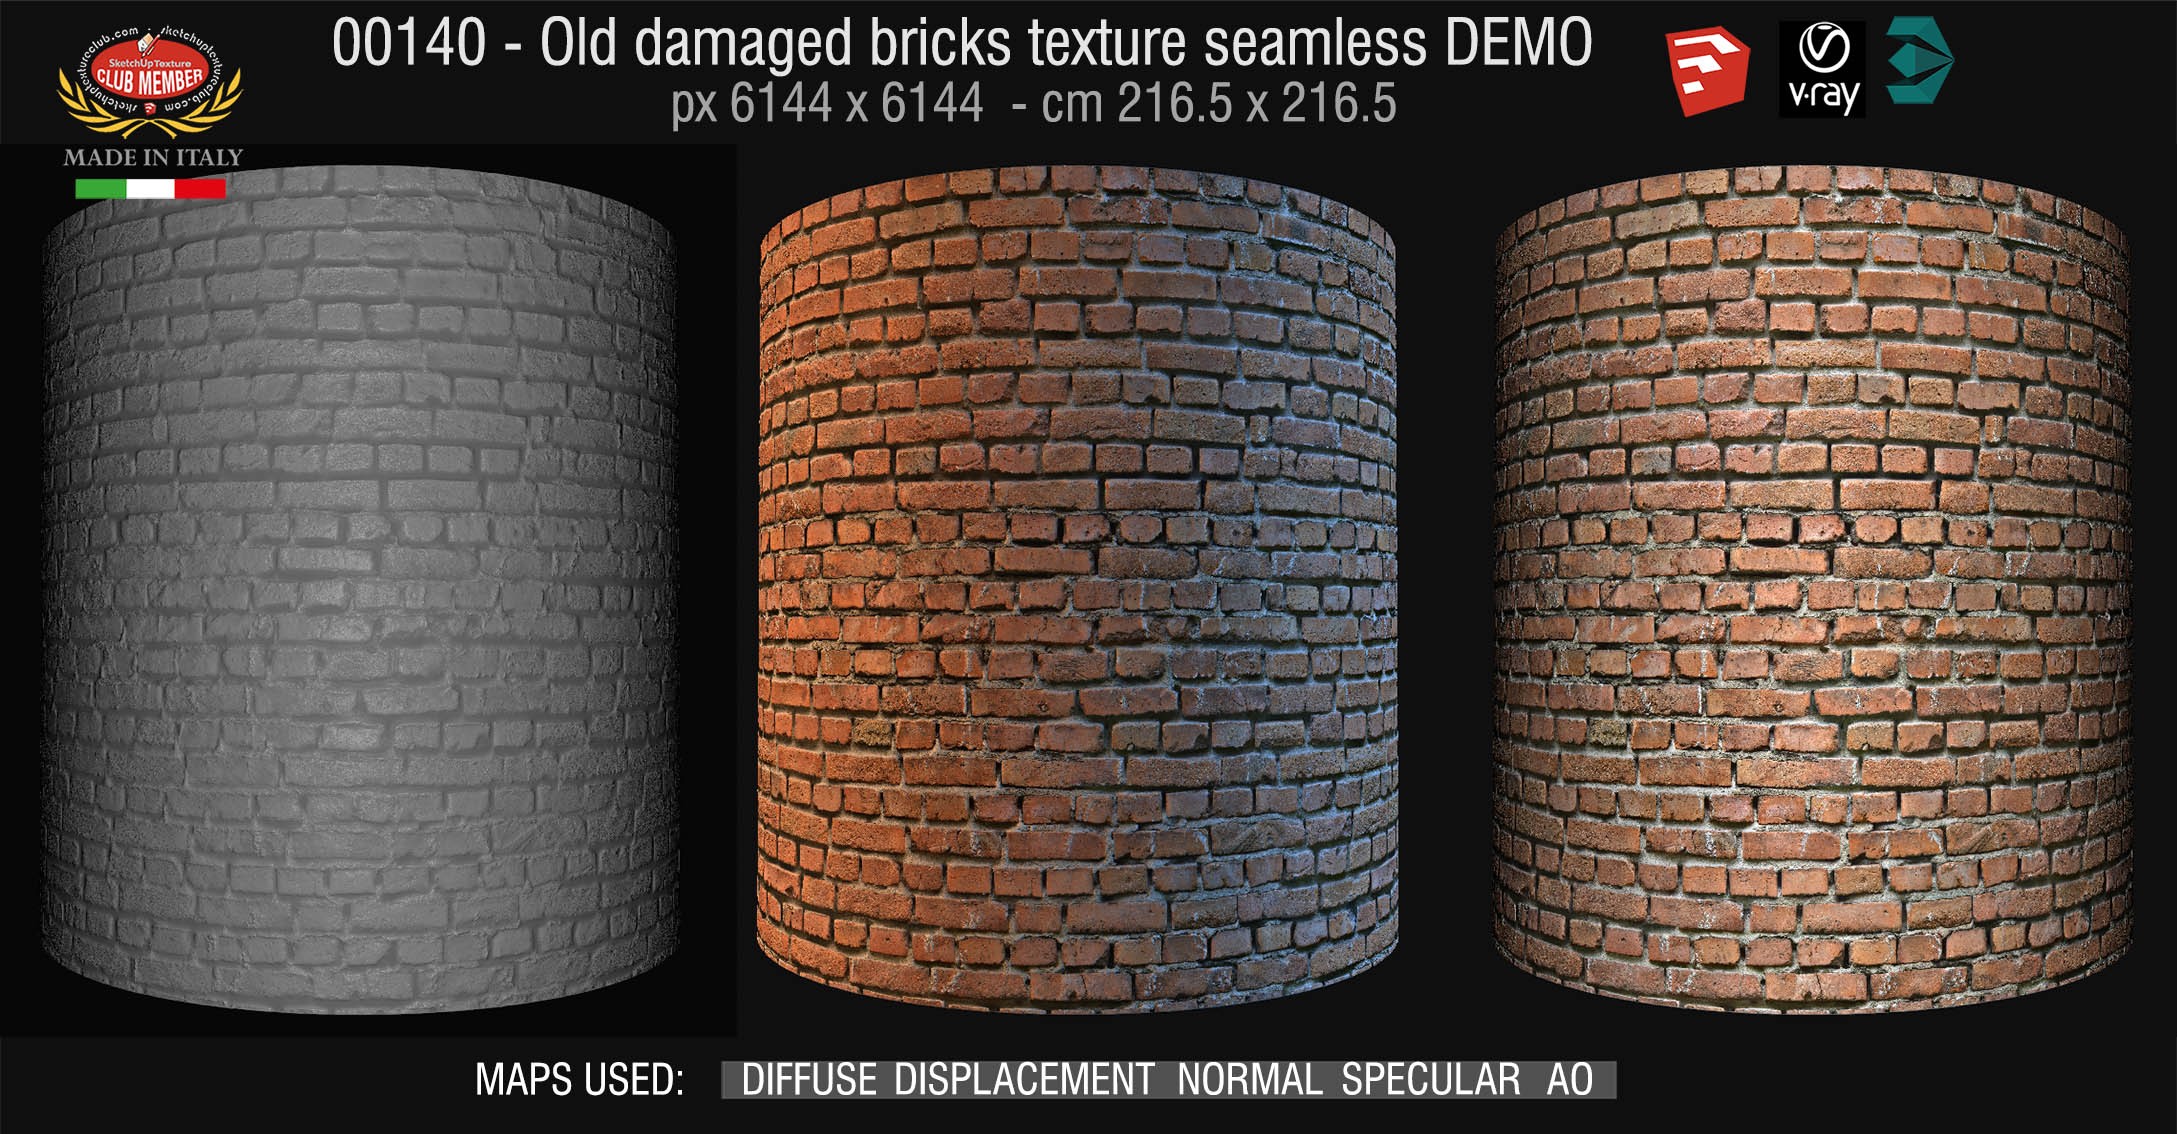 00140 HR Damaged bricks texture seamless + maps DEMO